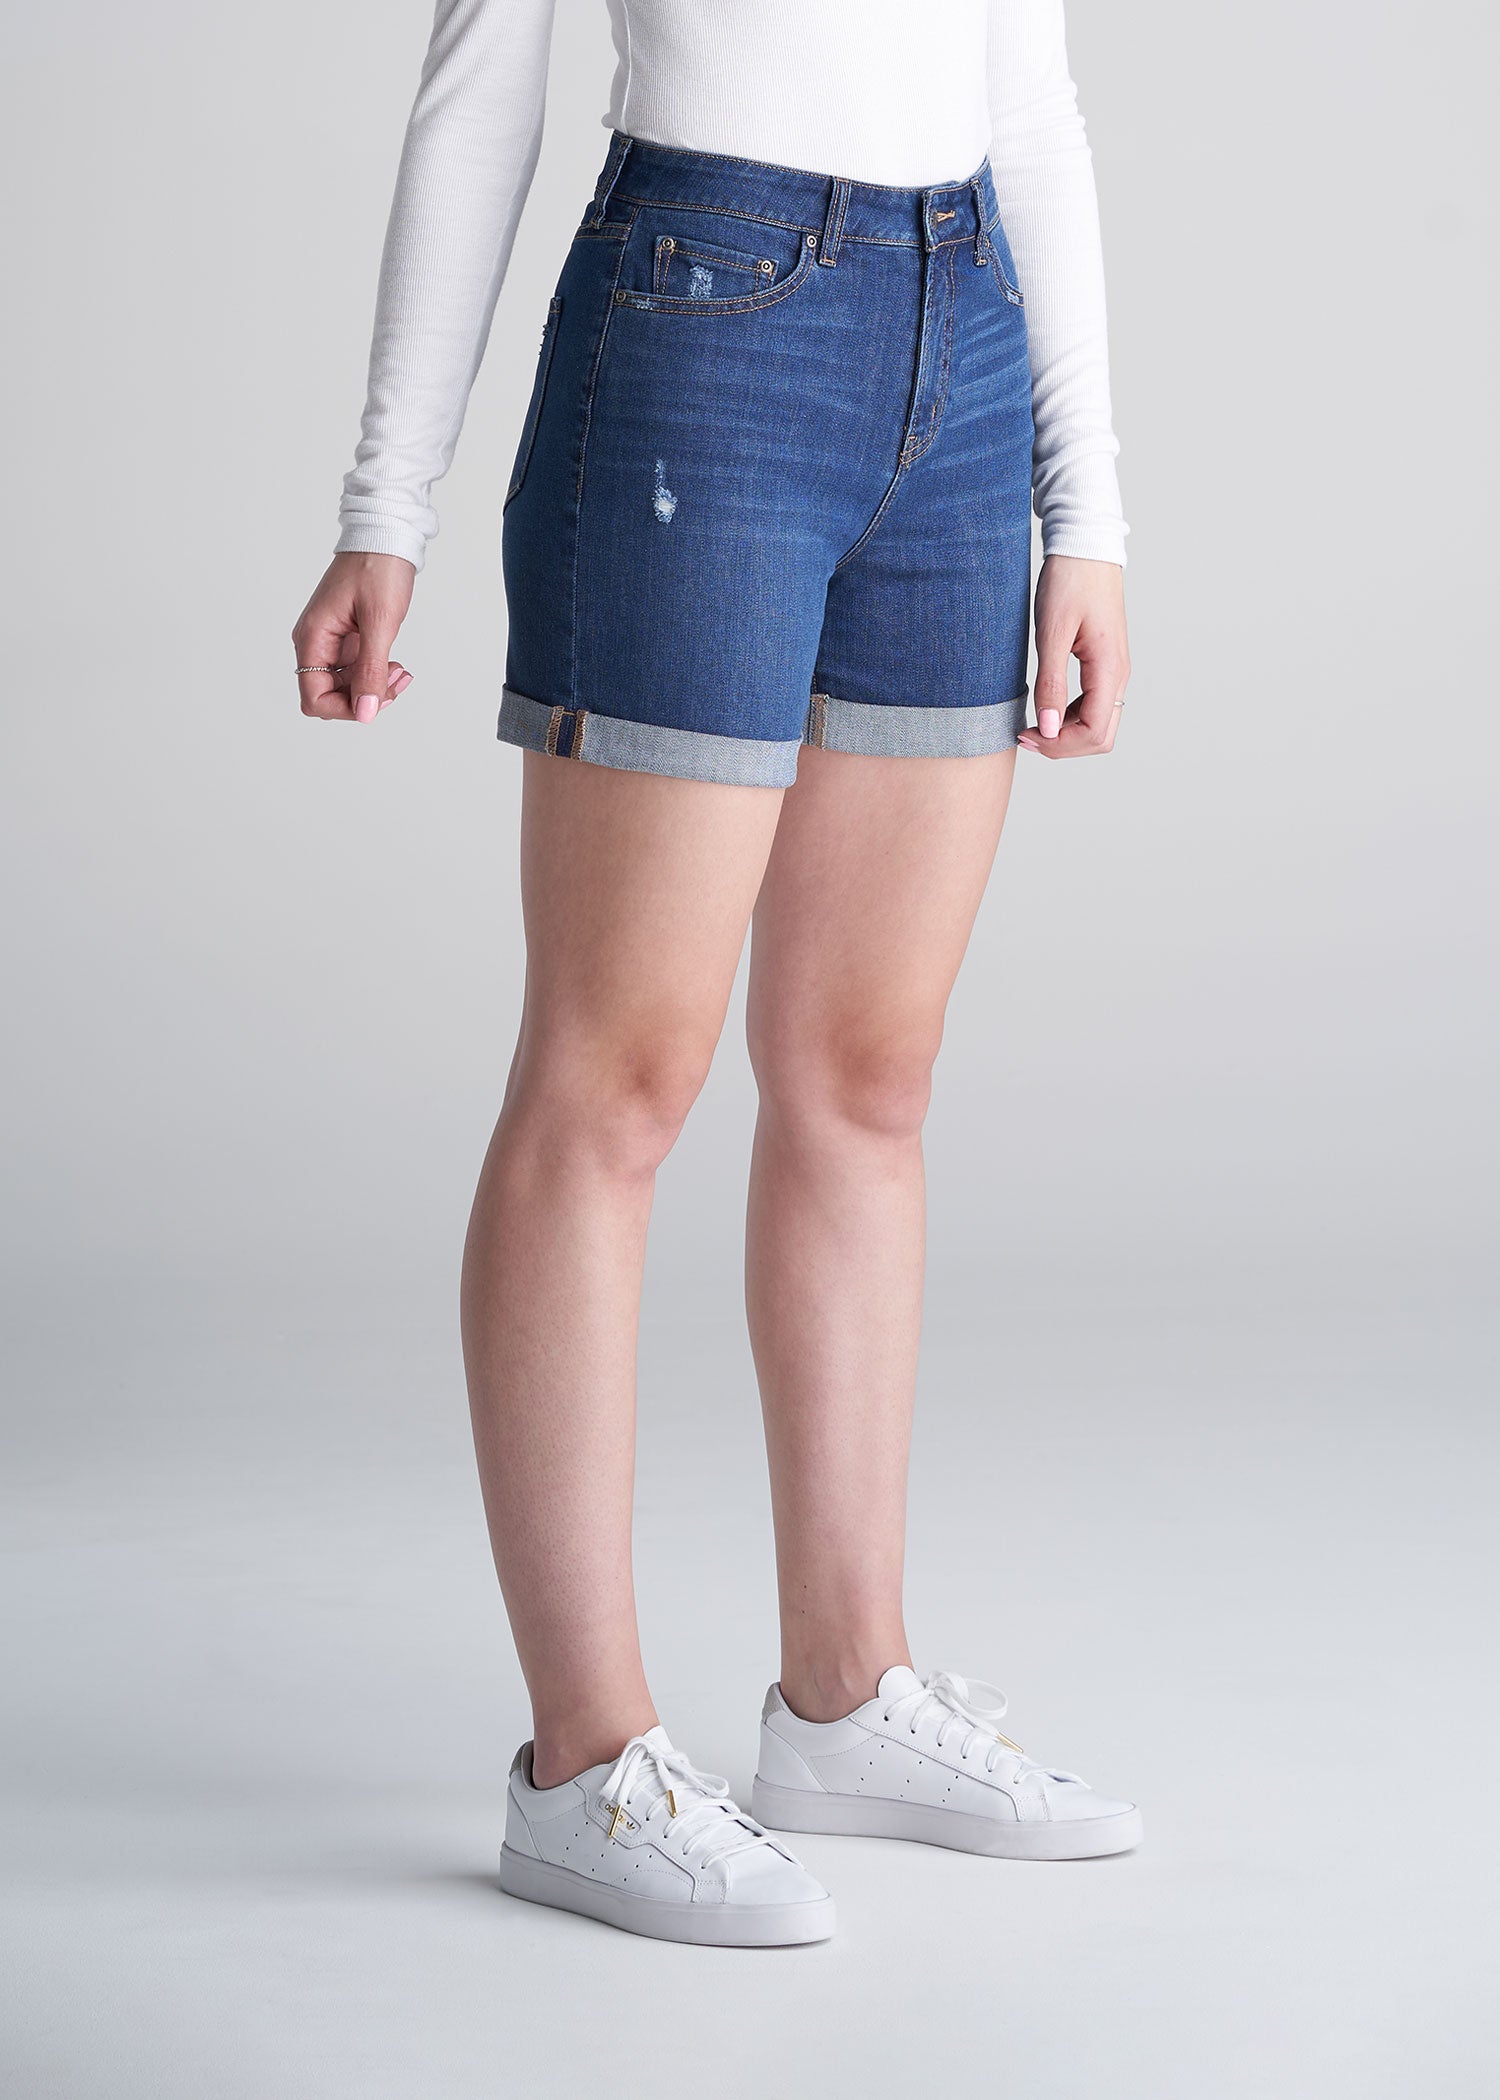 Denim Shorts for Tall | American Tall